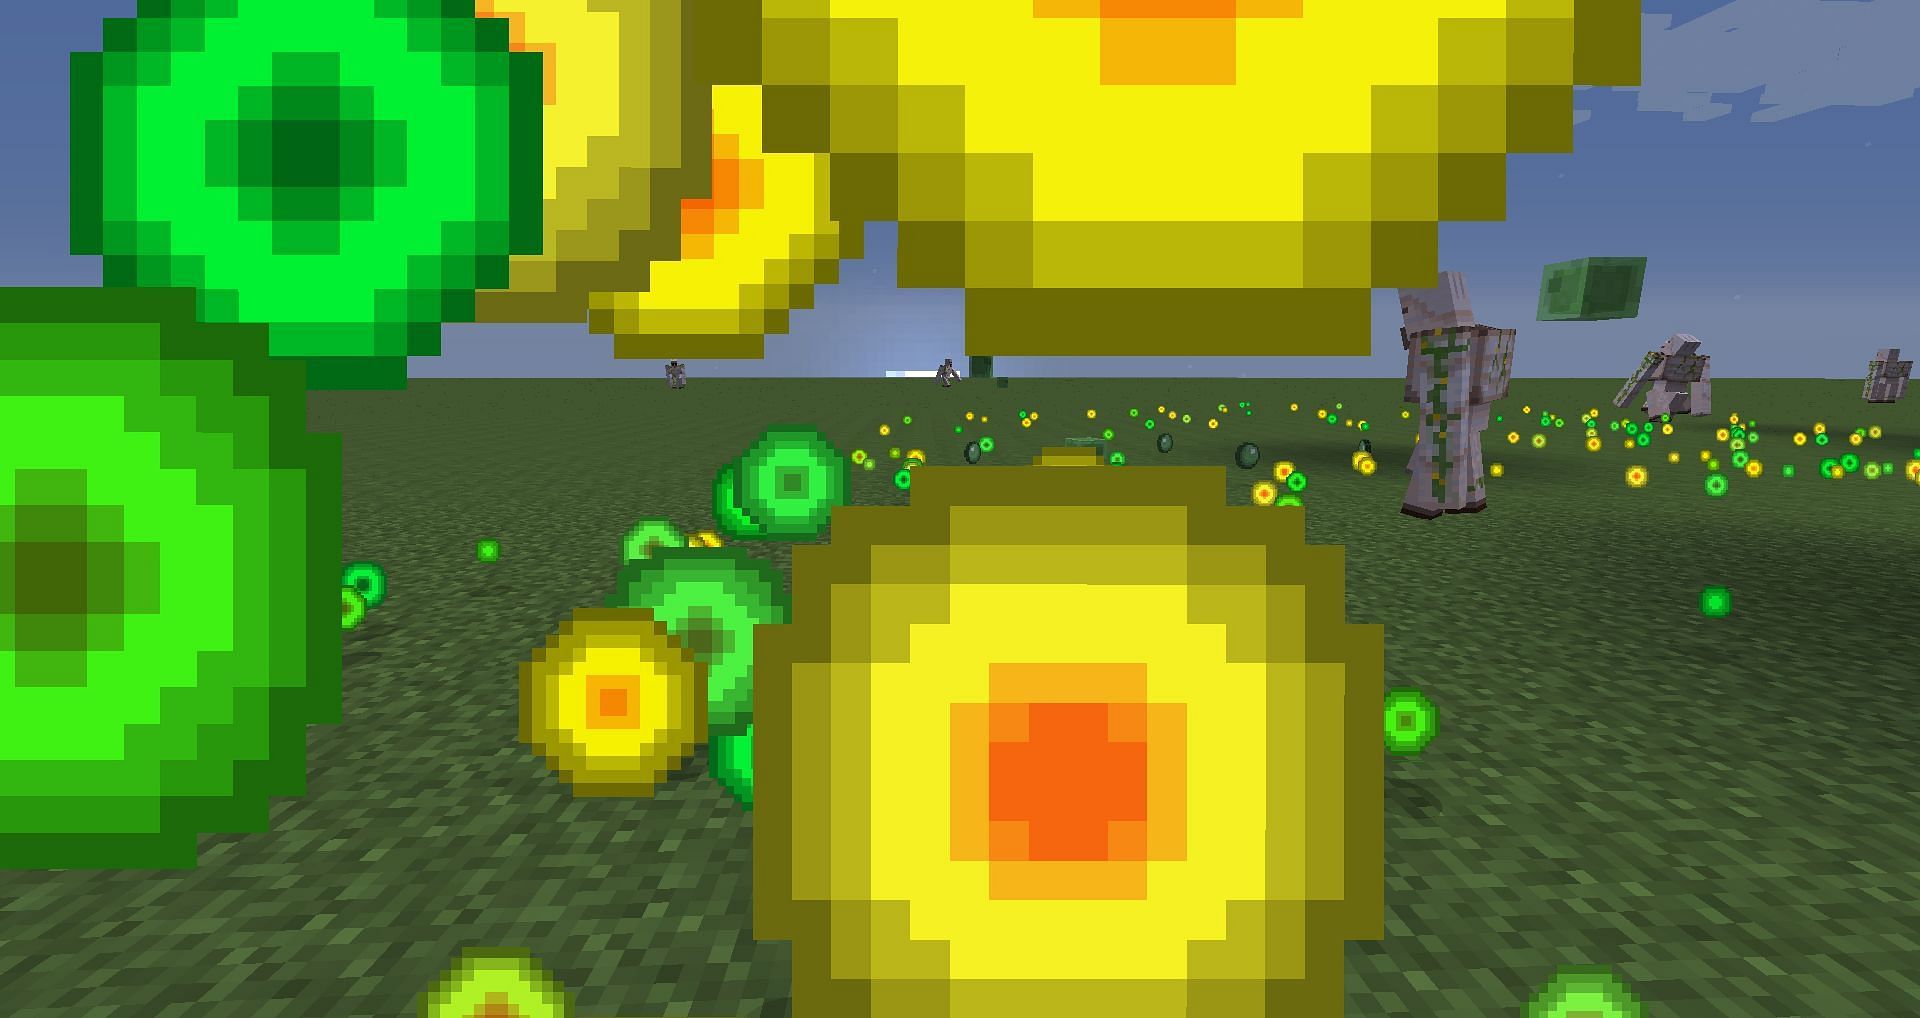 XP orbs in Minecraft (Image via Minecraft)